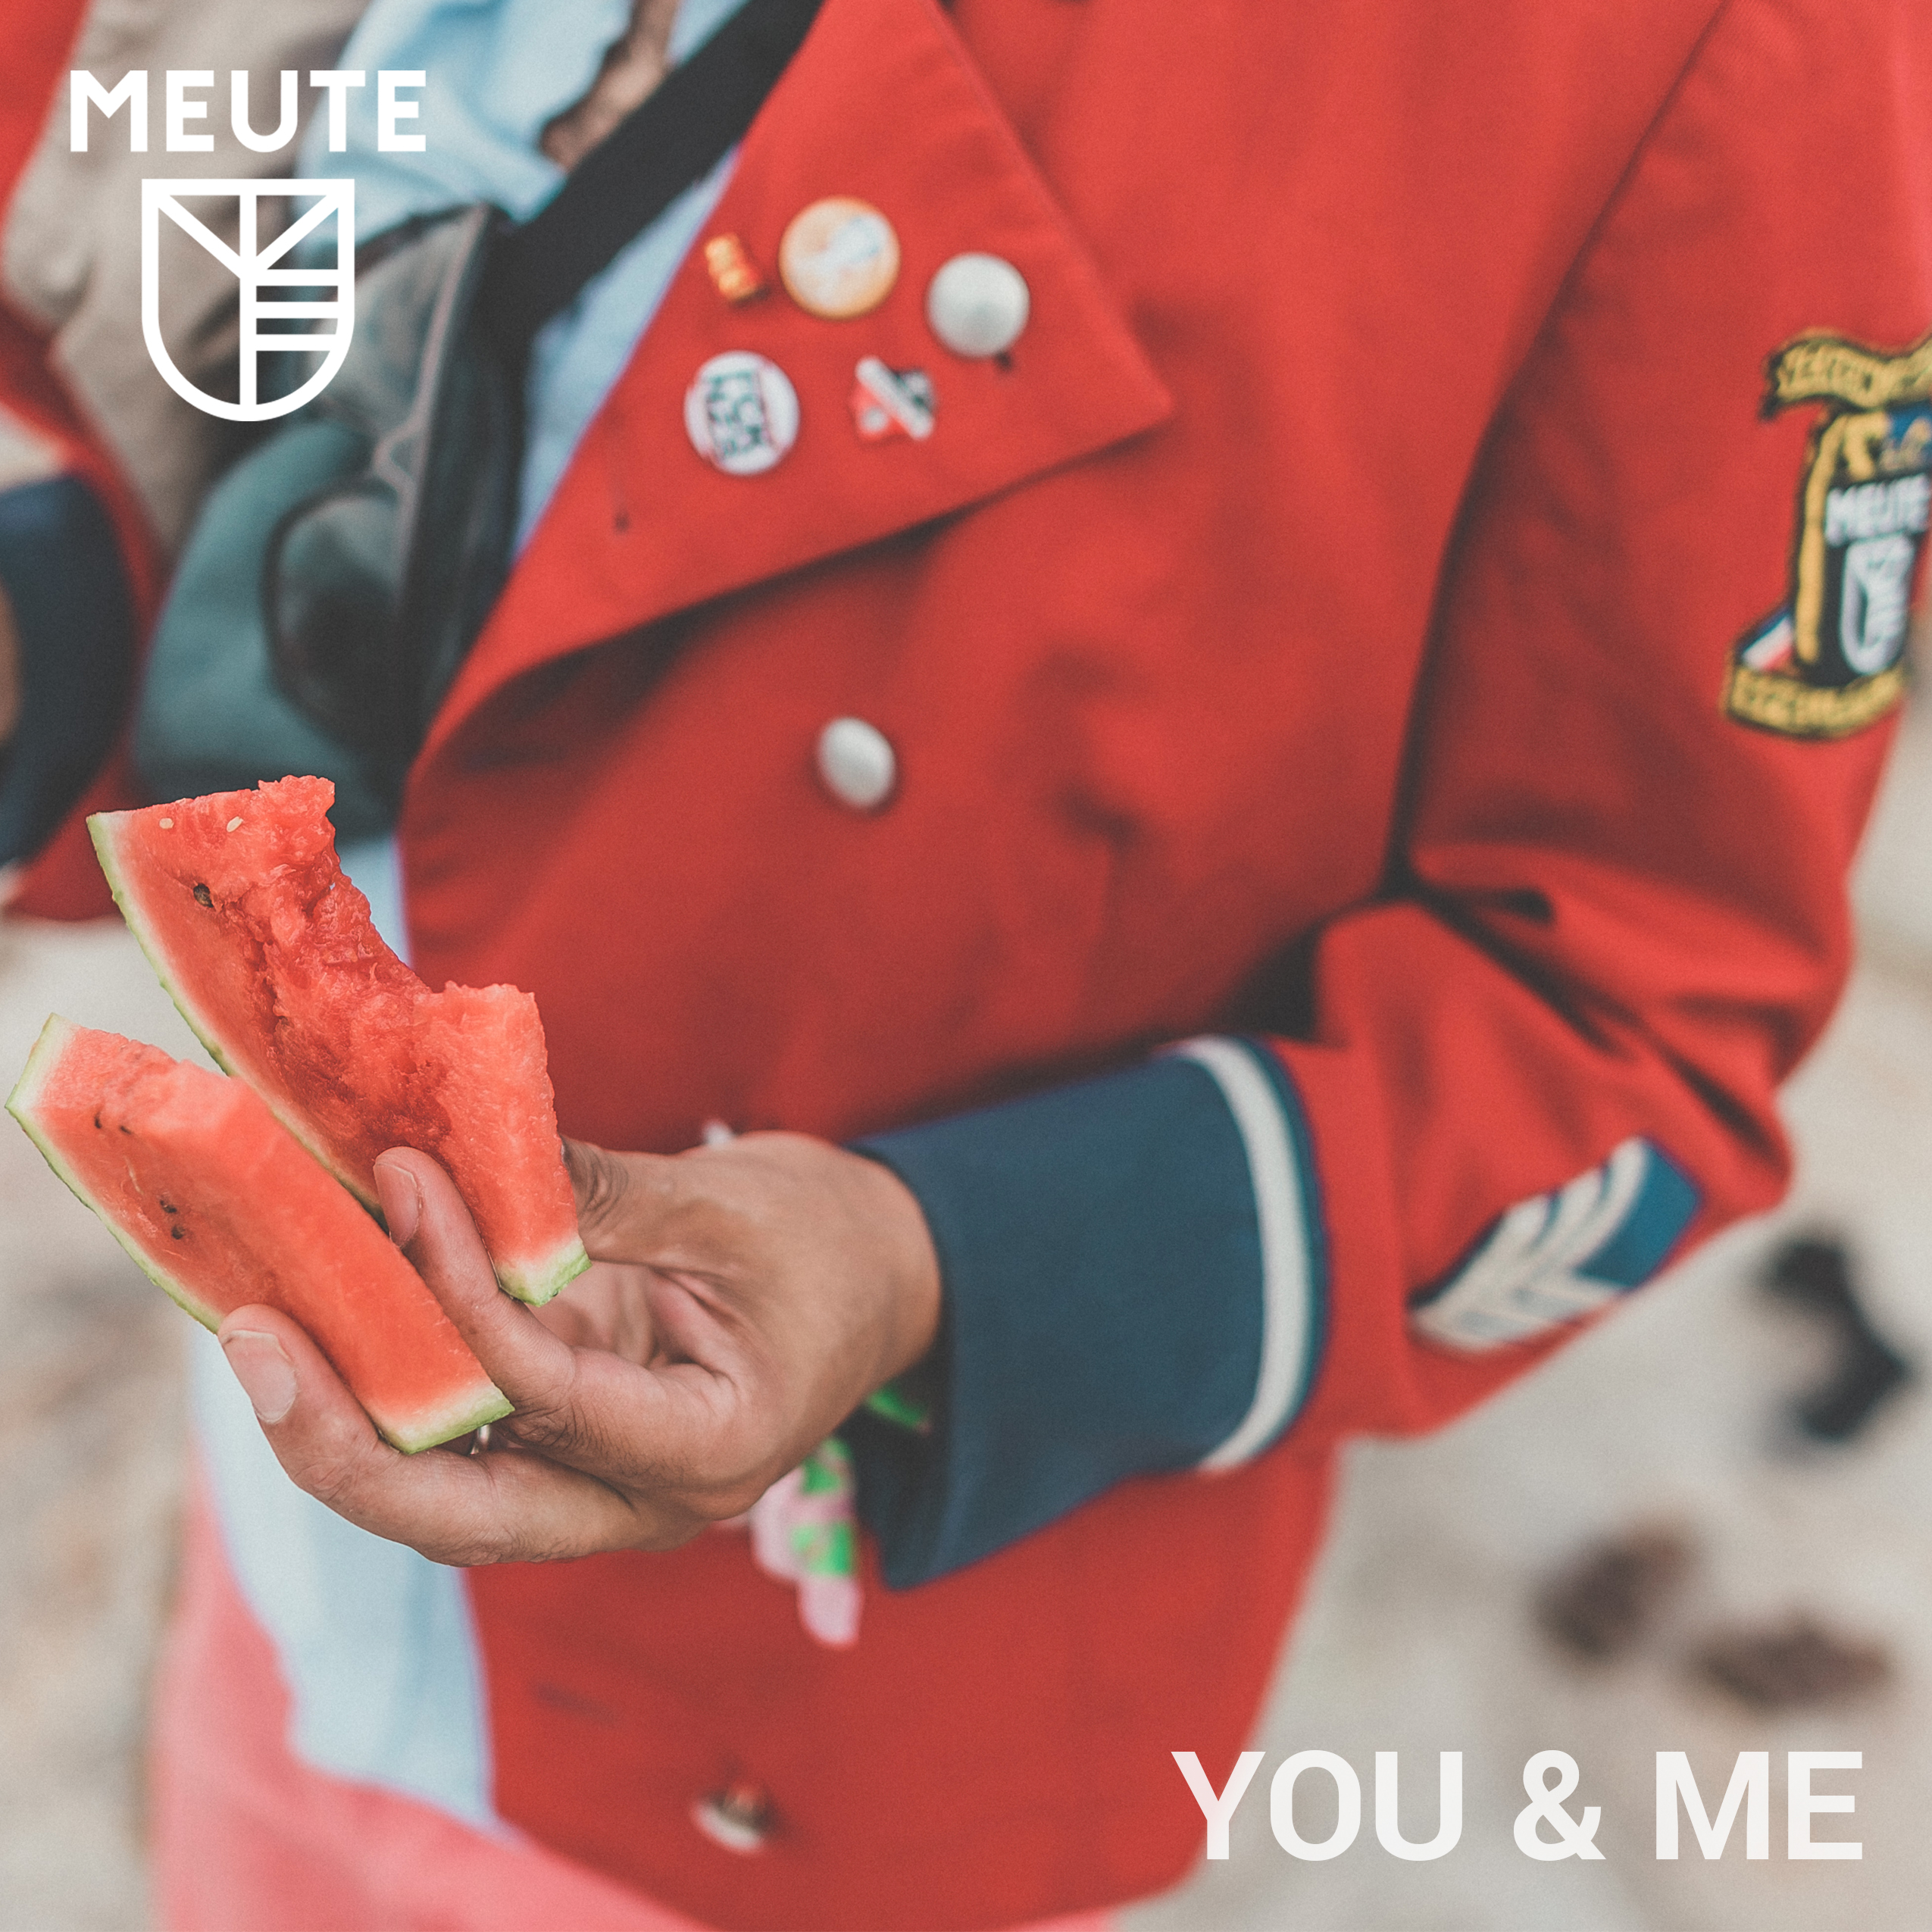 Meute : New track